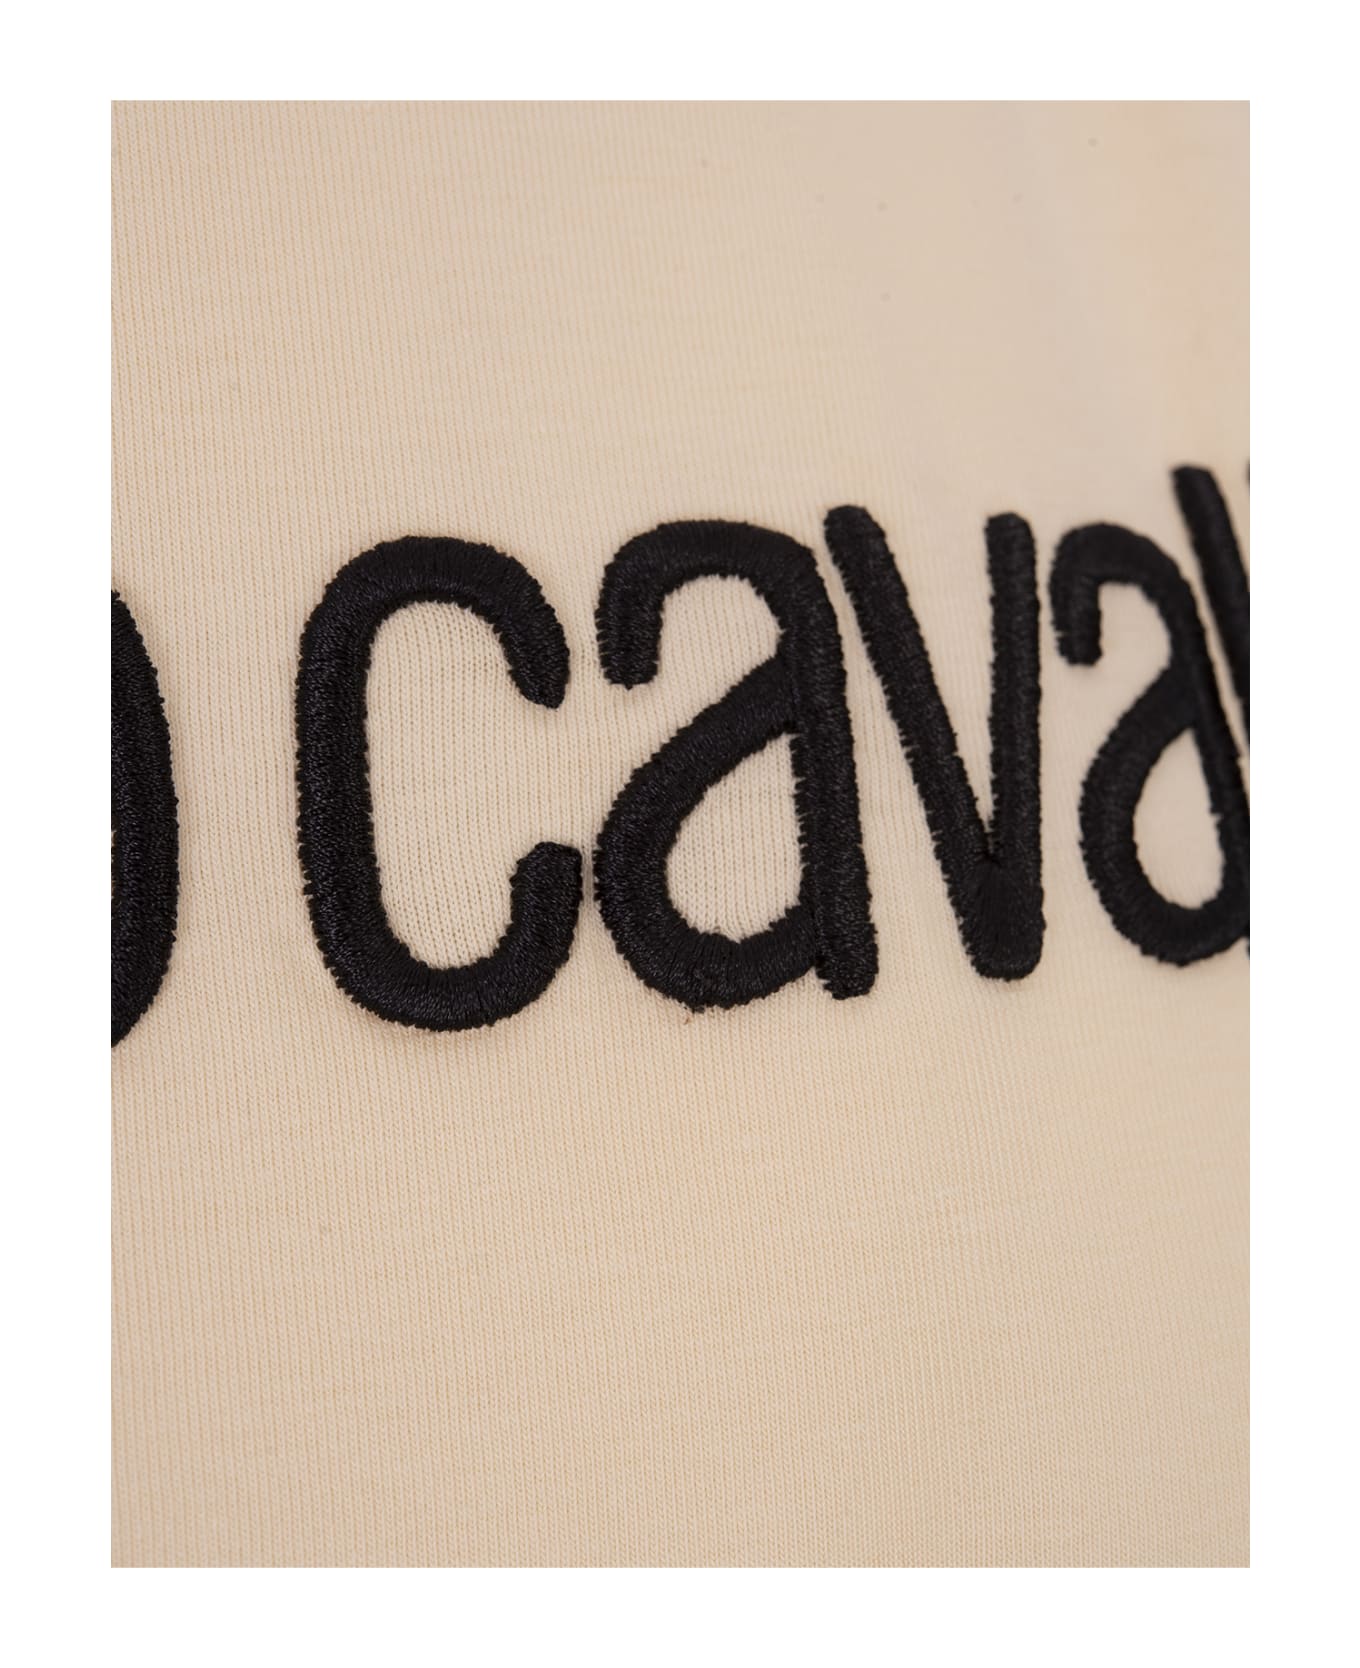 Roberto Cavalli Ivory T-shirt With Logo - White Tシャツ